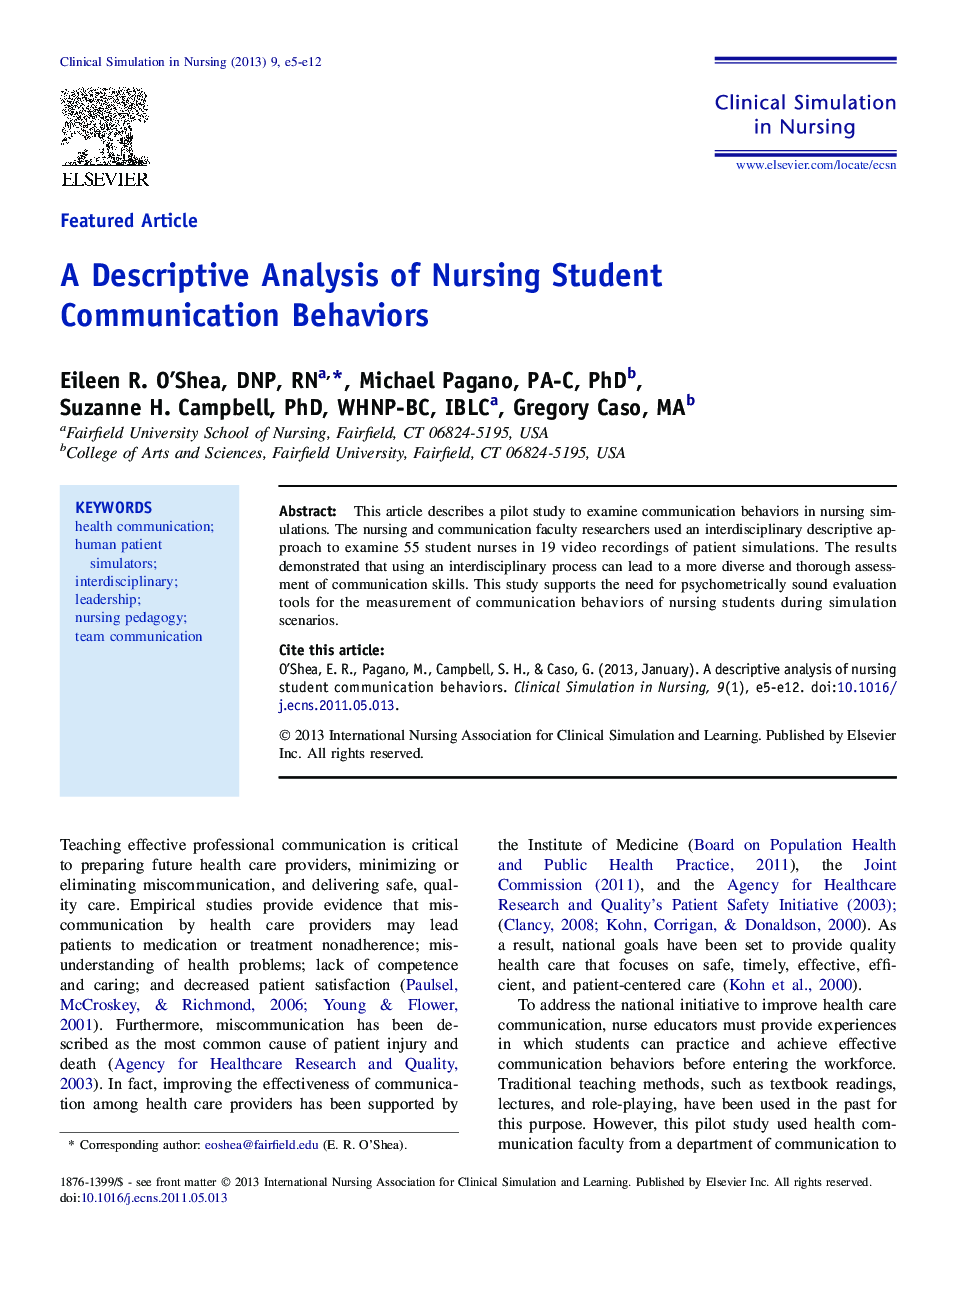 A Descriptive Analysis of Nursing Student Communication Behaviors